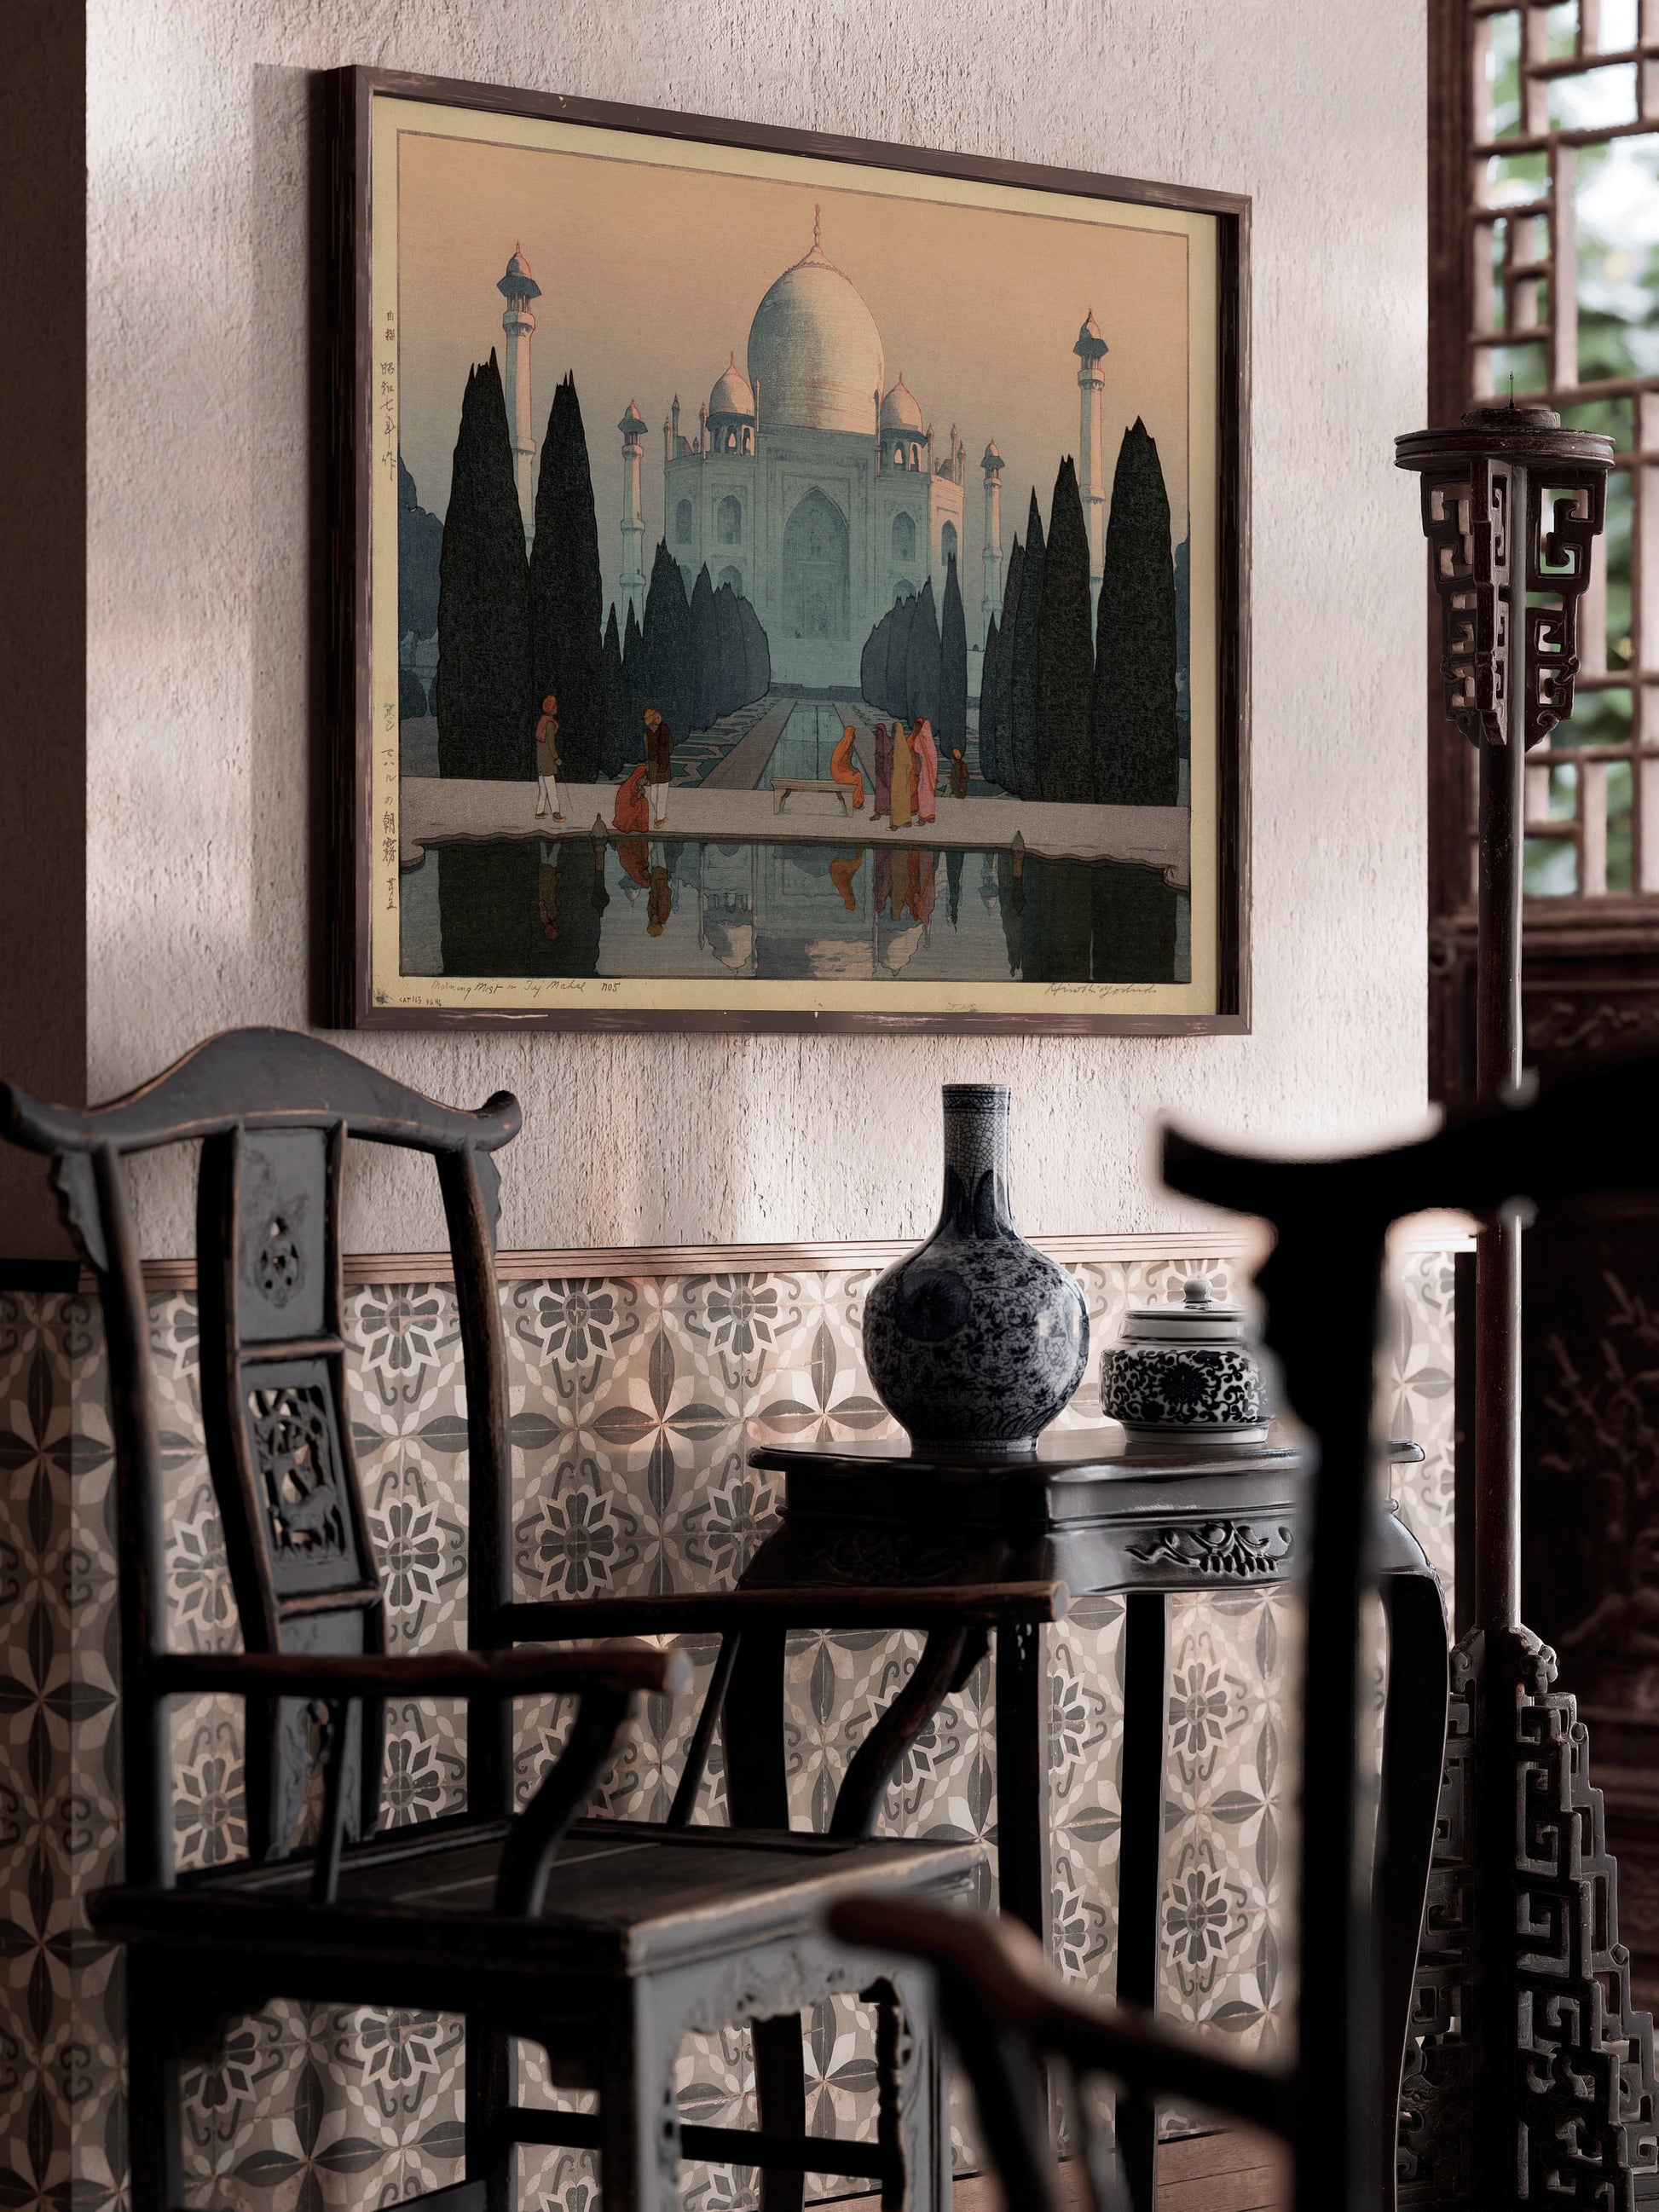 Hiroshi Yoshida – Taj Mahal in the Mist | Vintage Japanese Woodblock Art (available framed or unframed)